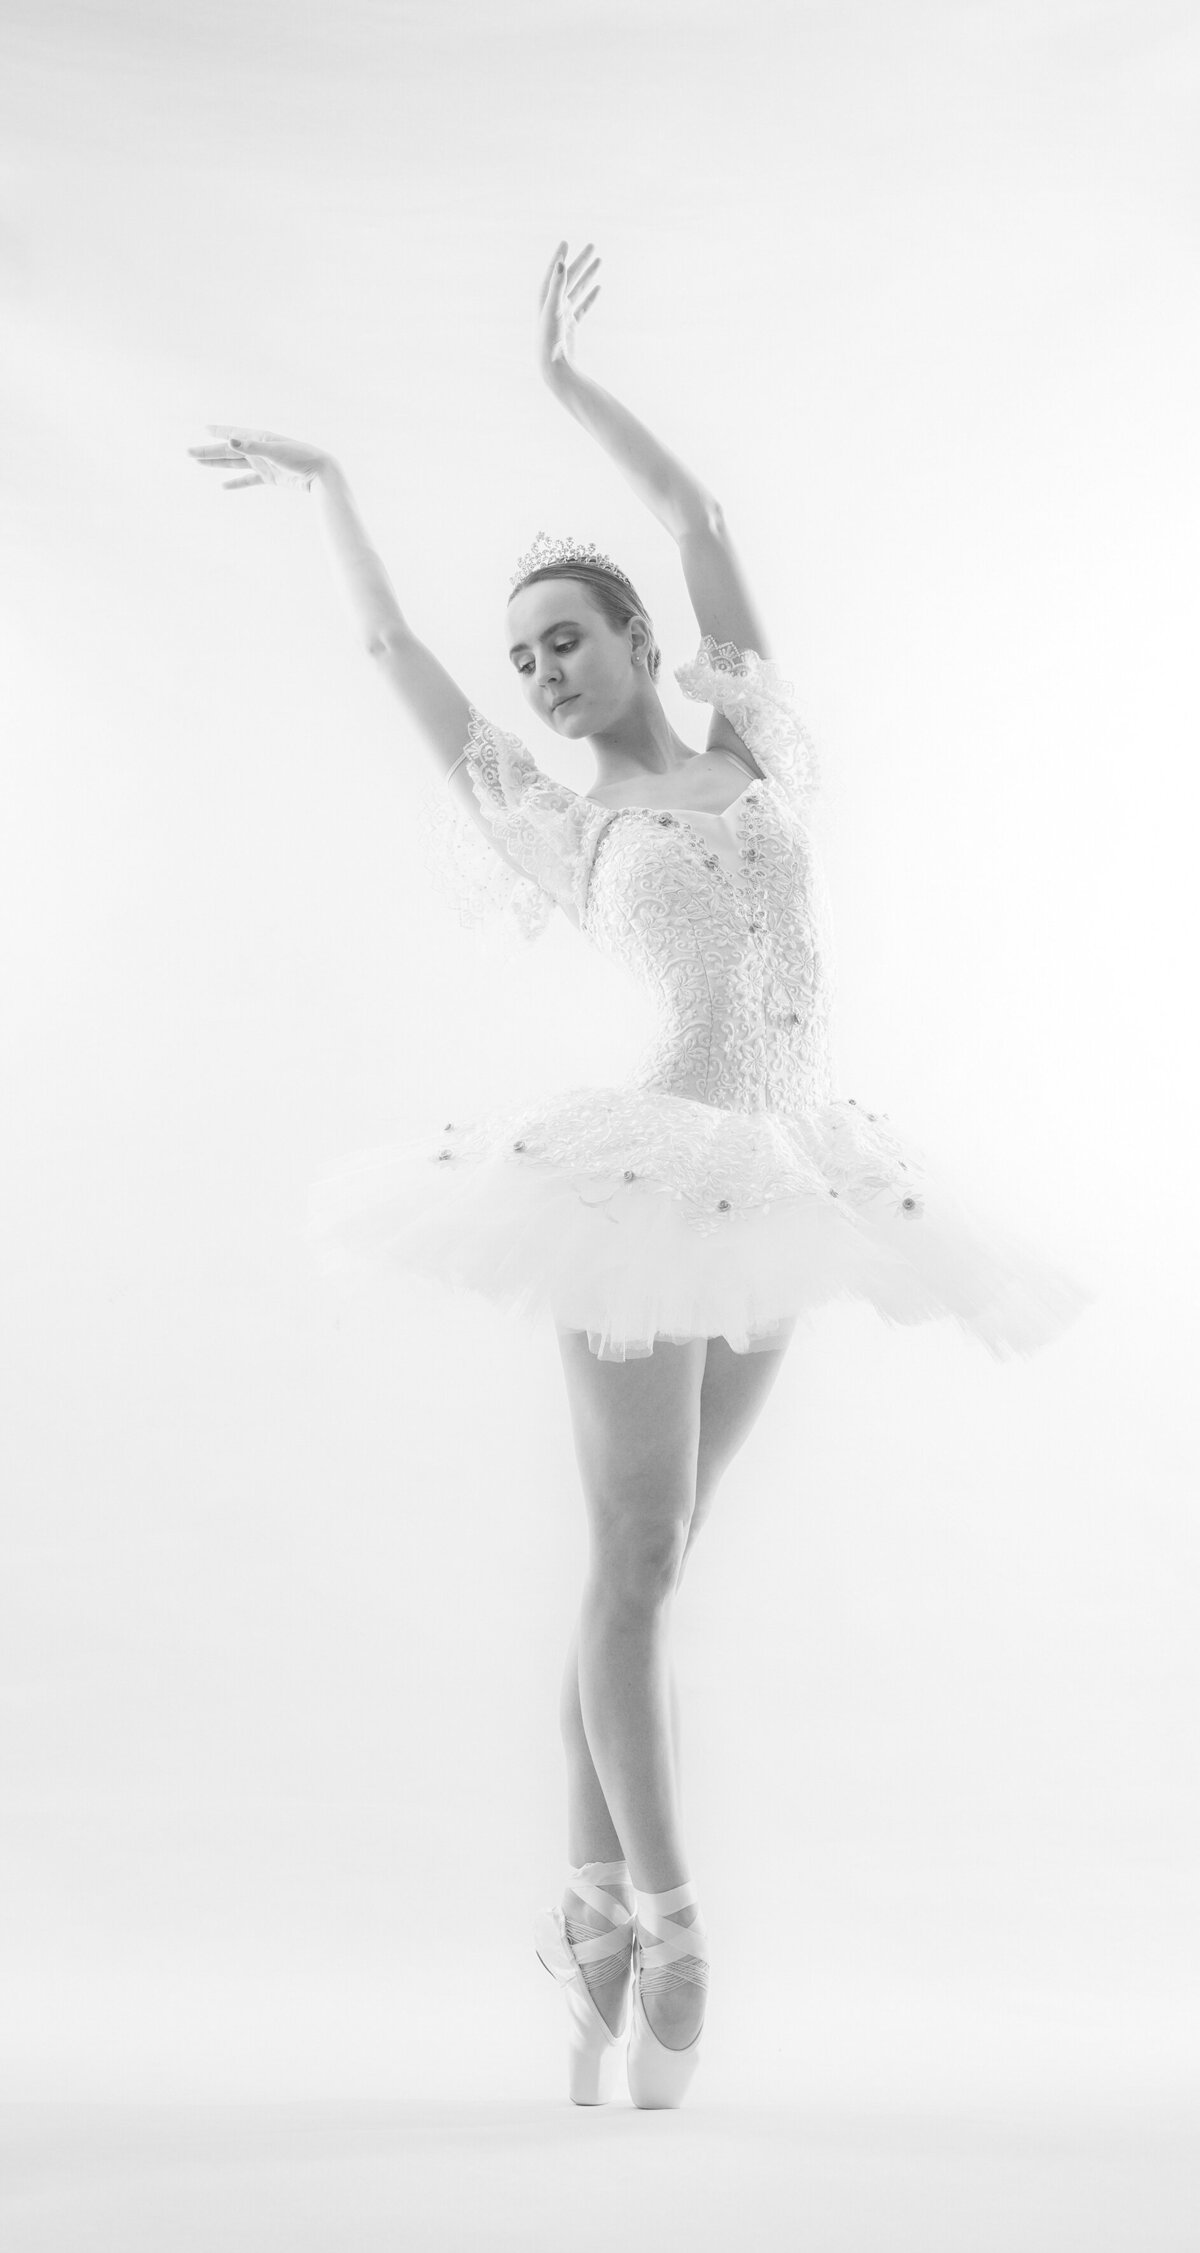 Ballett dans fotografering Resvik Foto Grimstad